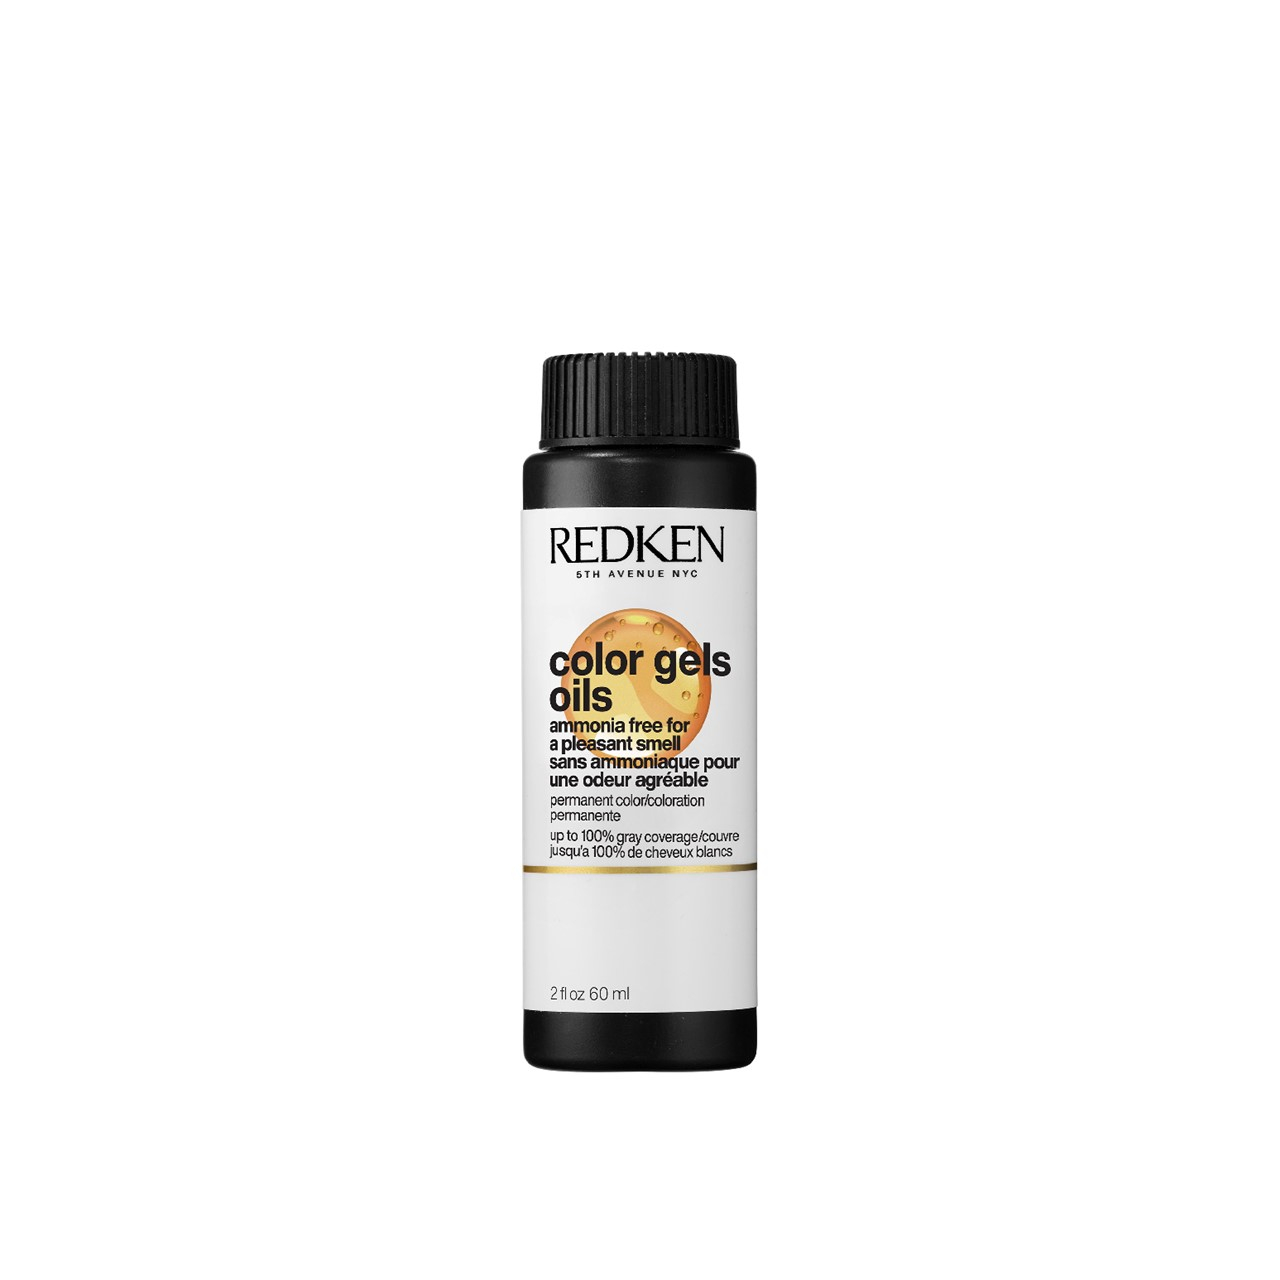 Redken Color Gels Oils 8NW Safari Permanent Hair Dye 60ml (2.03 fl oz)